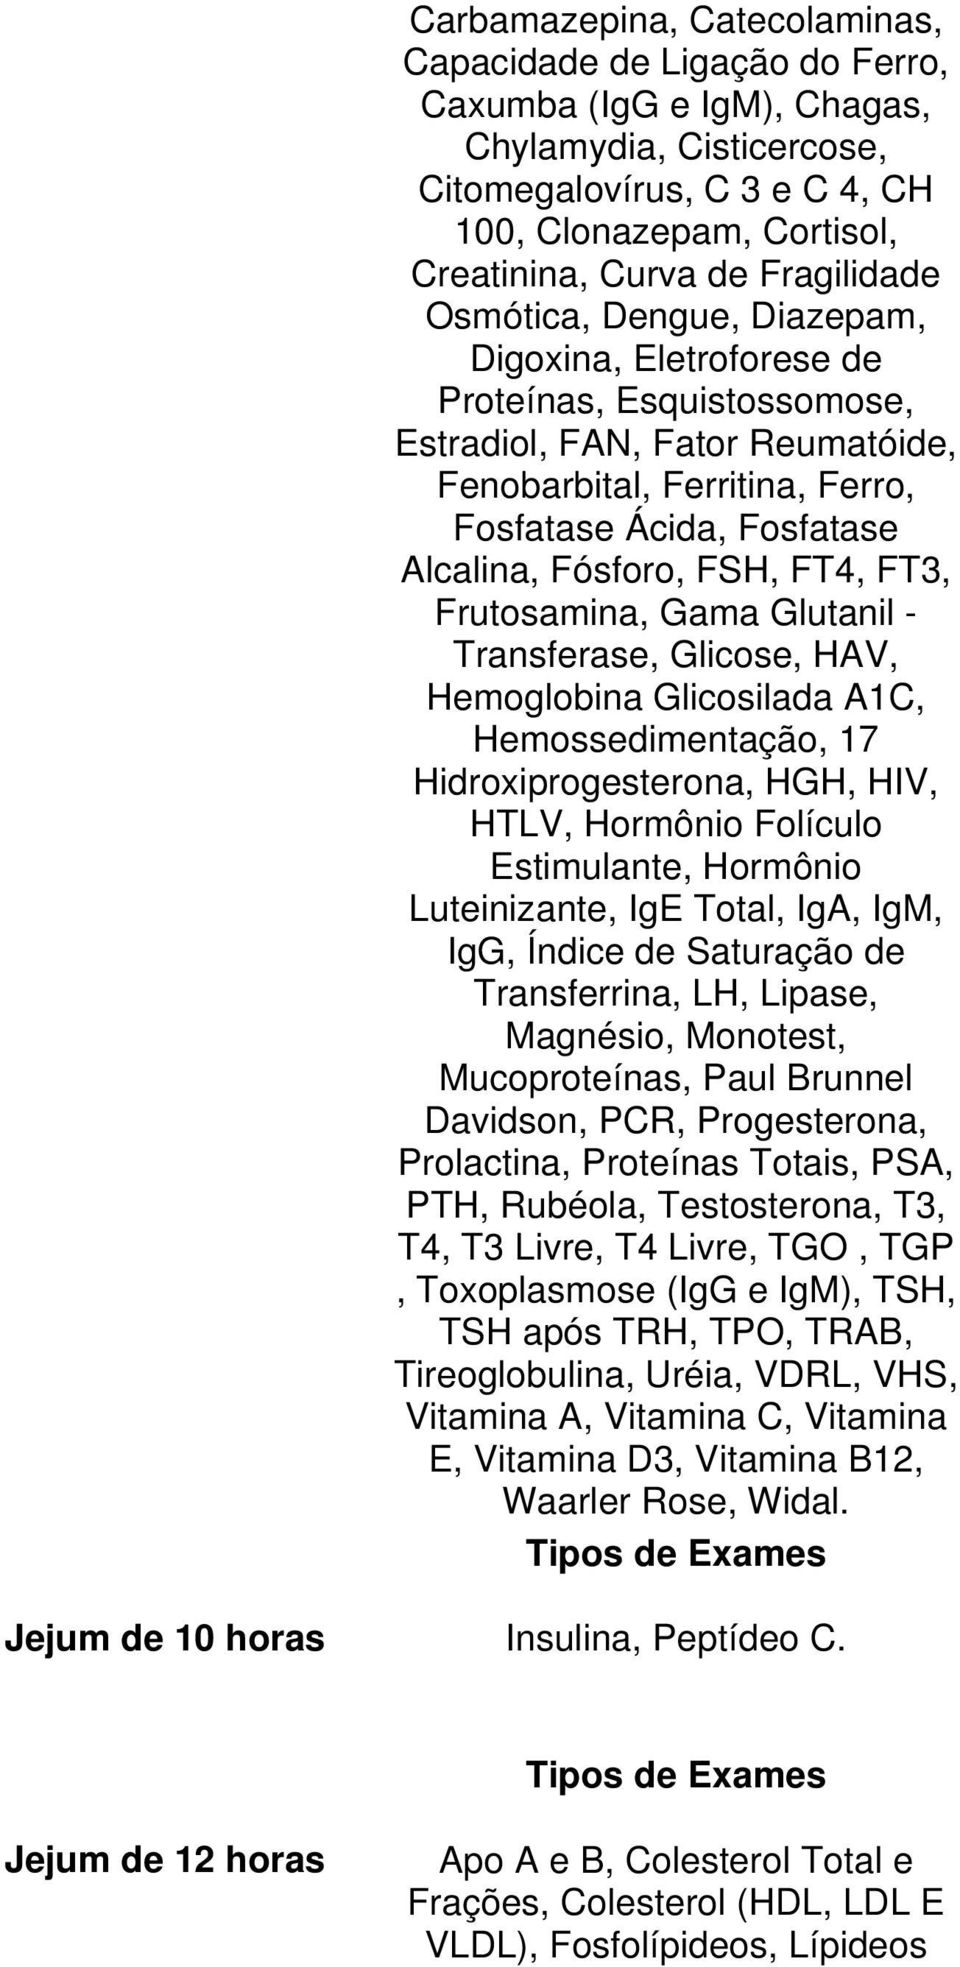 Fósforo, FSH, FT4, FT3, Frutosamina, Gama Glutanil - Transferase, Glicose, HAV, Hemoglobina Glicosilada A1C, Hemossedimentação, 17 Hidroxiprogesterona, HGH, HIV, HTLV, Hormônio Folículo Estimulante,